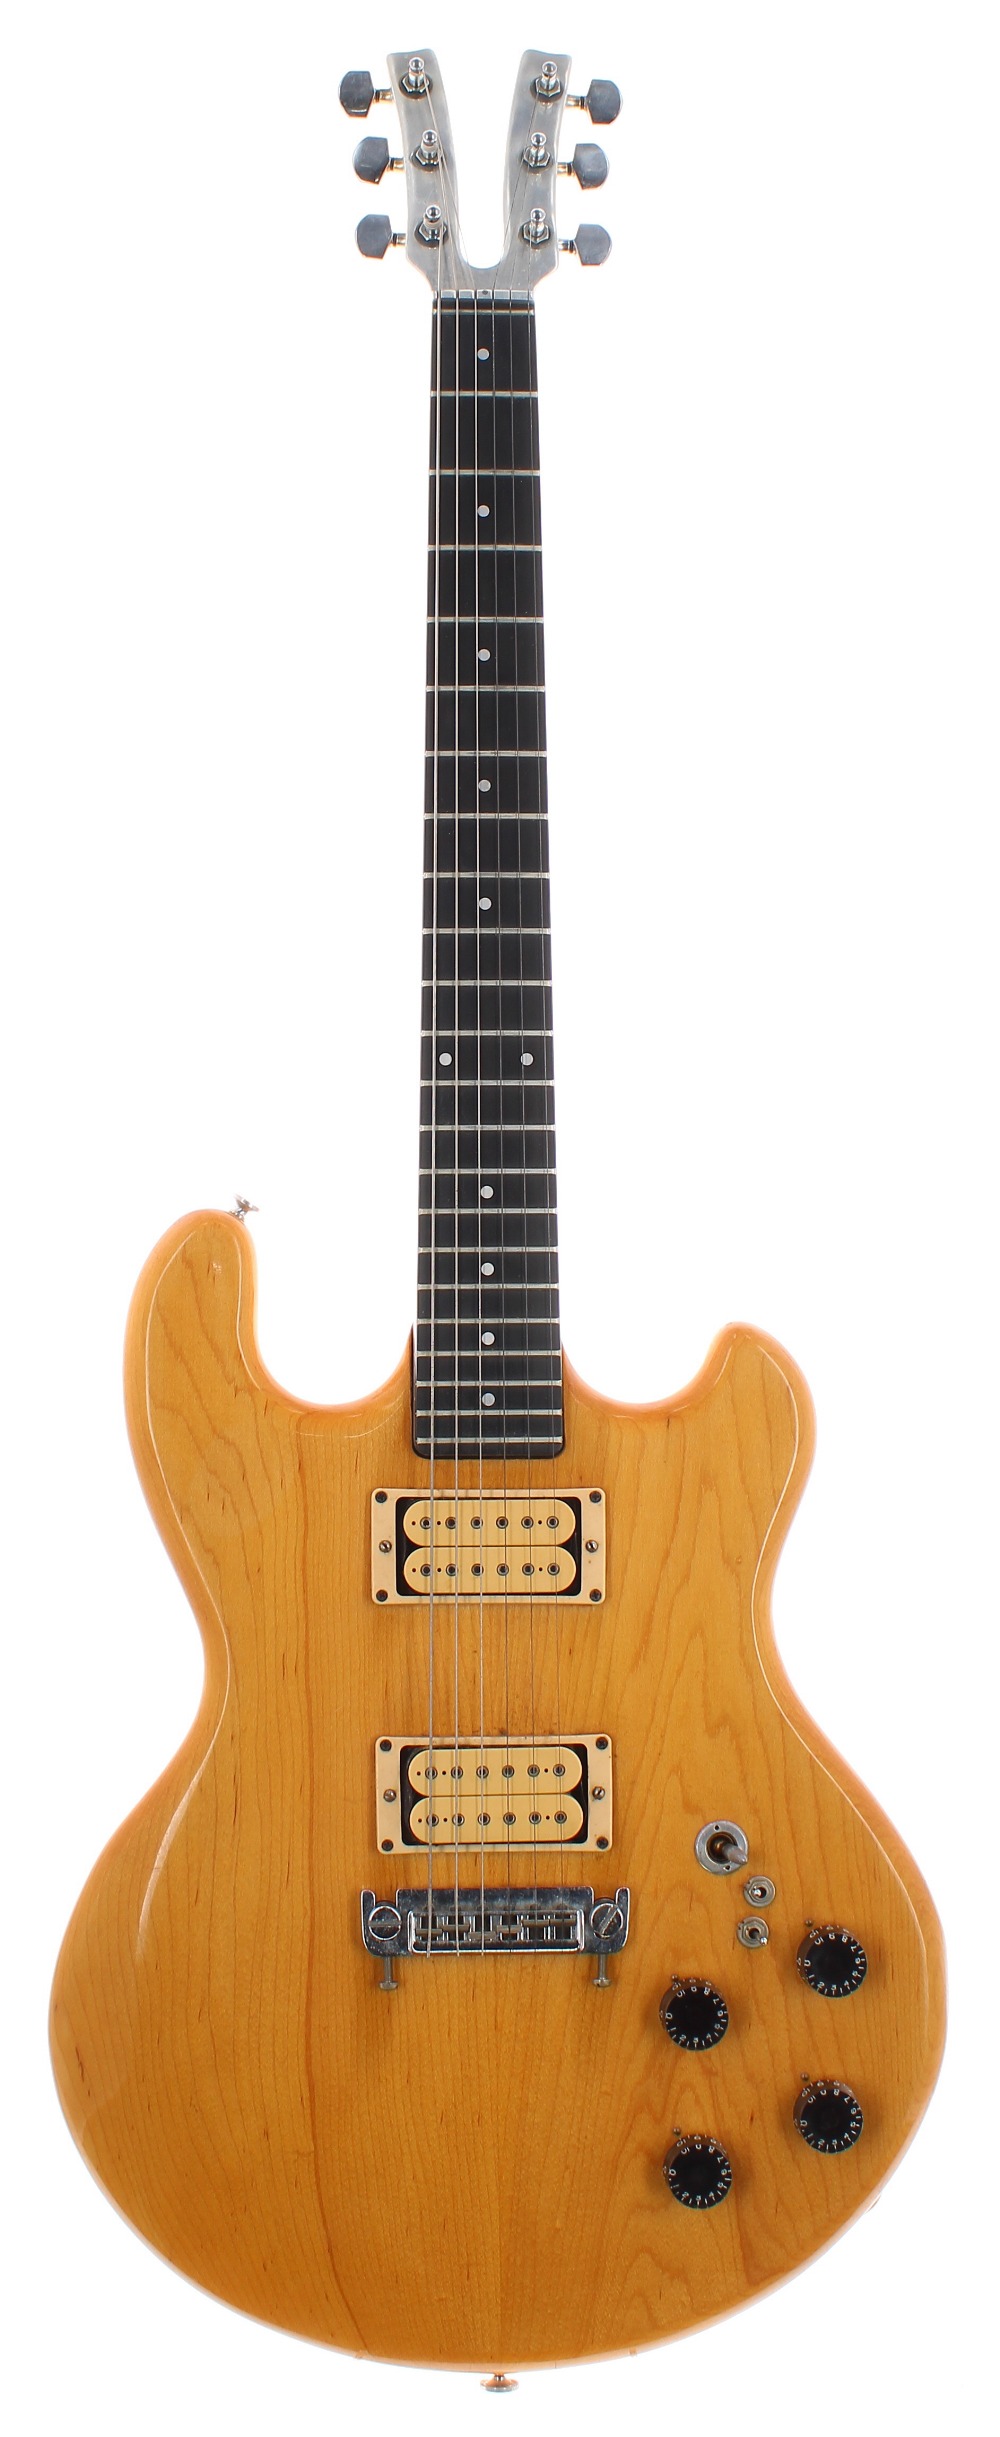 Late 1970s Kramer DMZ 2000 electric guitar, made in USA, ser. no. 0xxx0; Finish: natural; Fretboard: